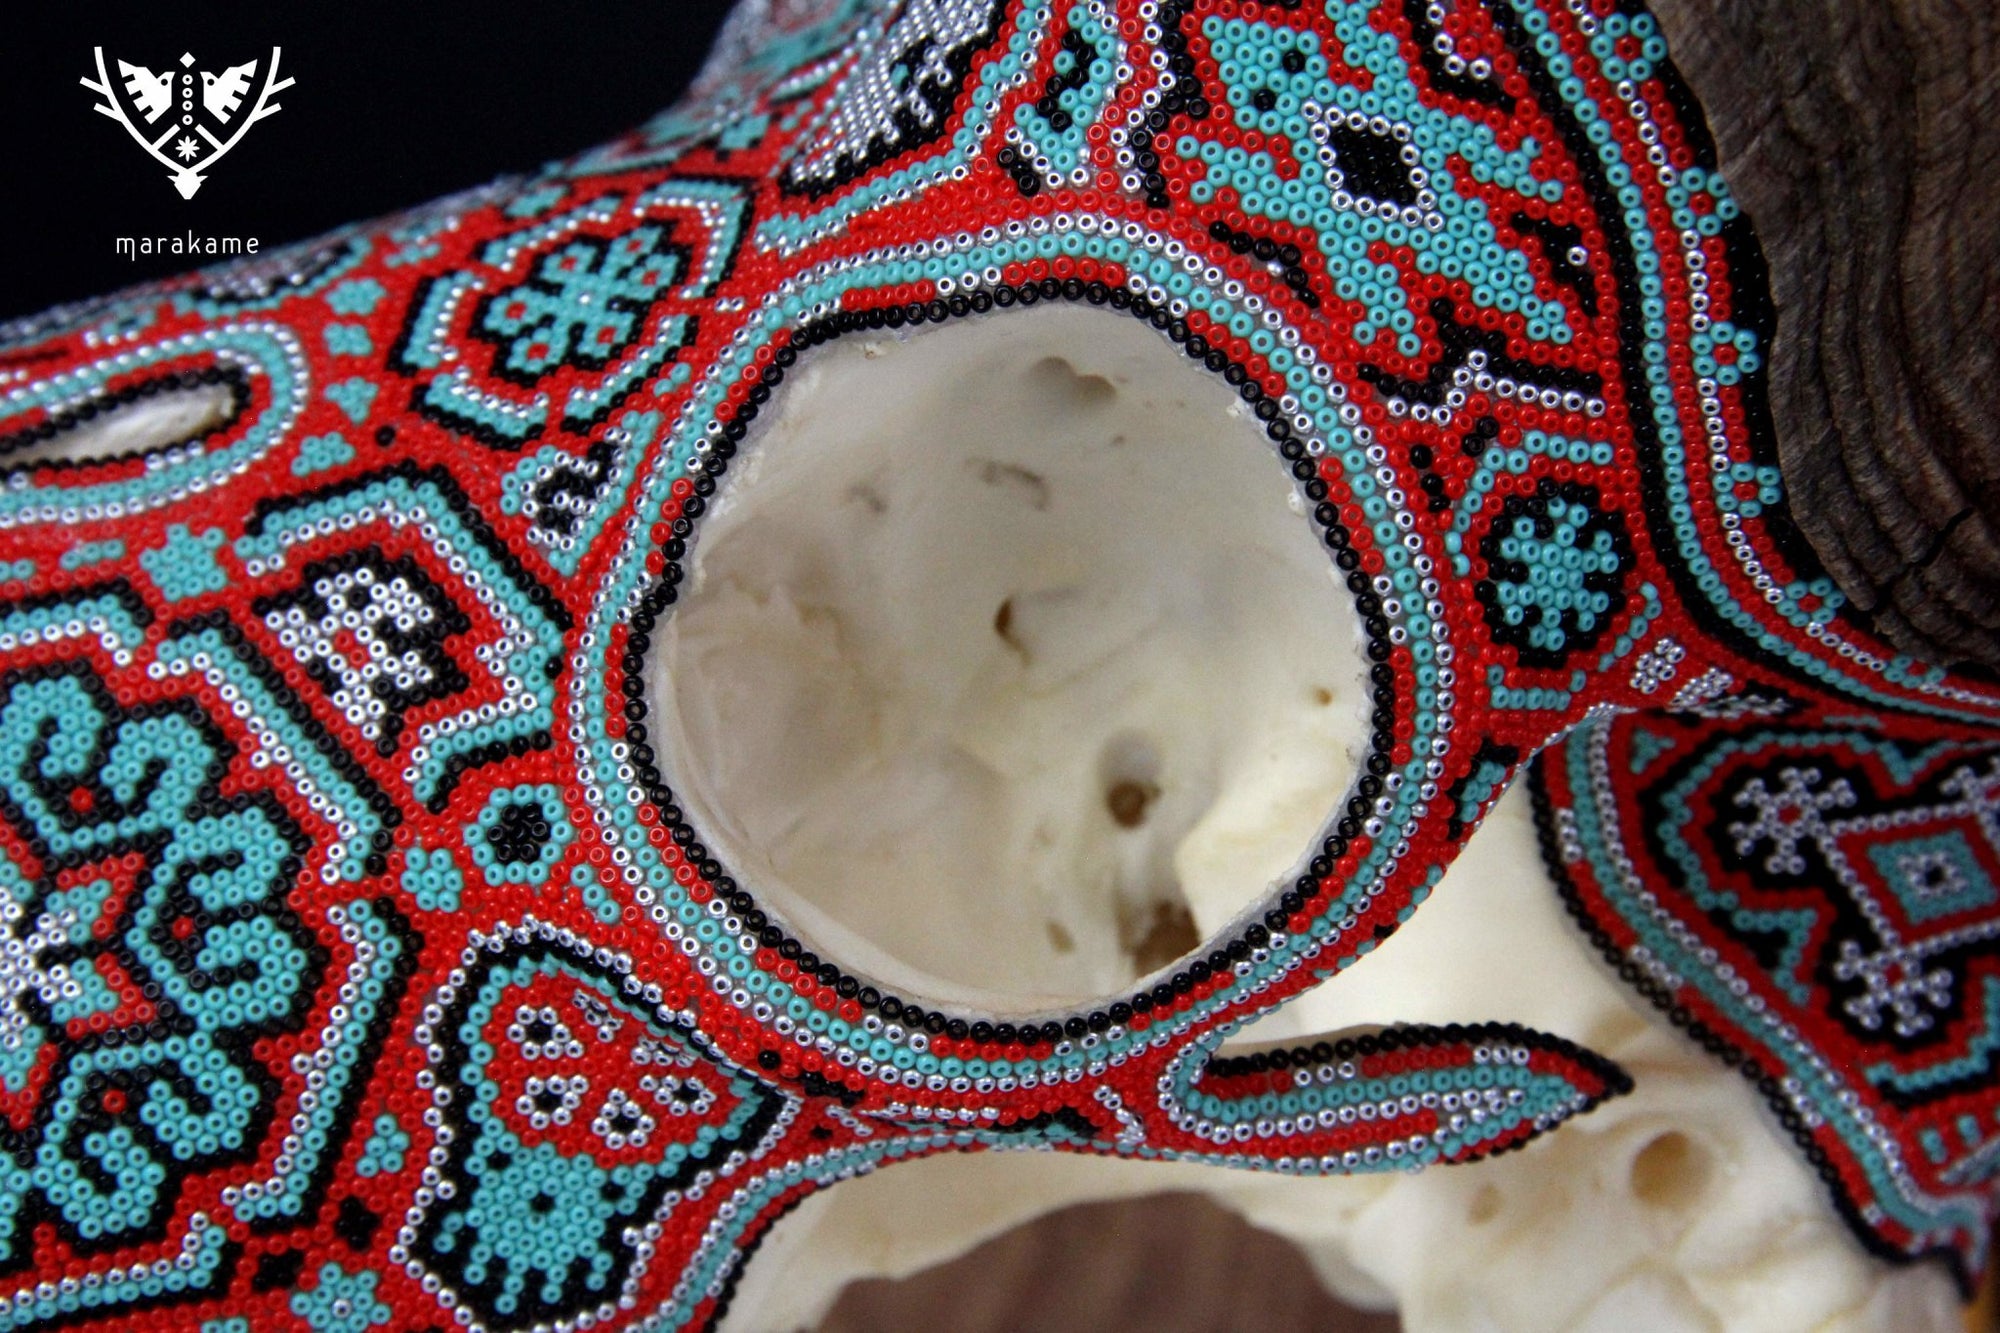 Authentic Bighorn Sheep Skull - Tatewari - Huichol Art - Marakame